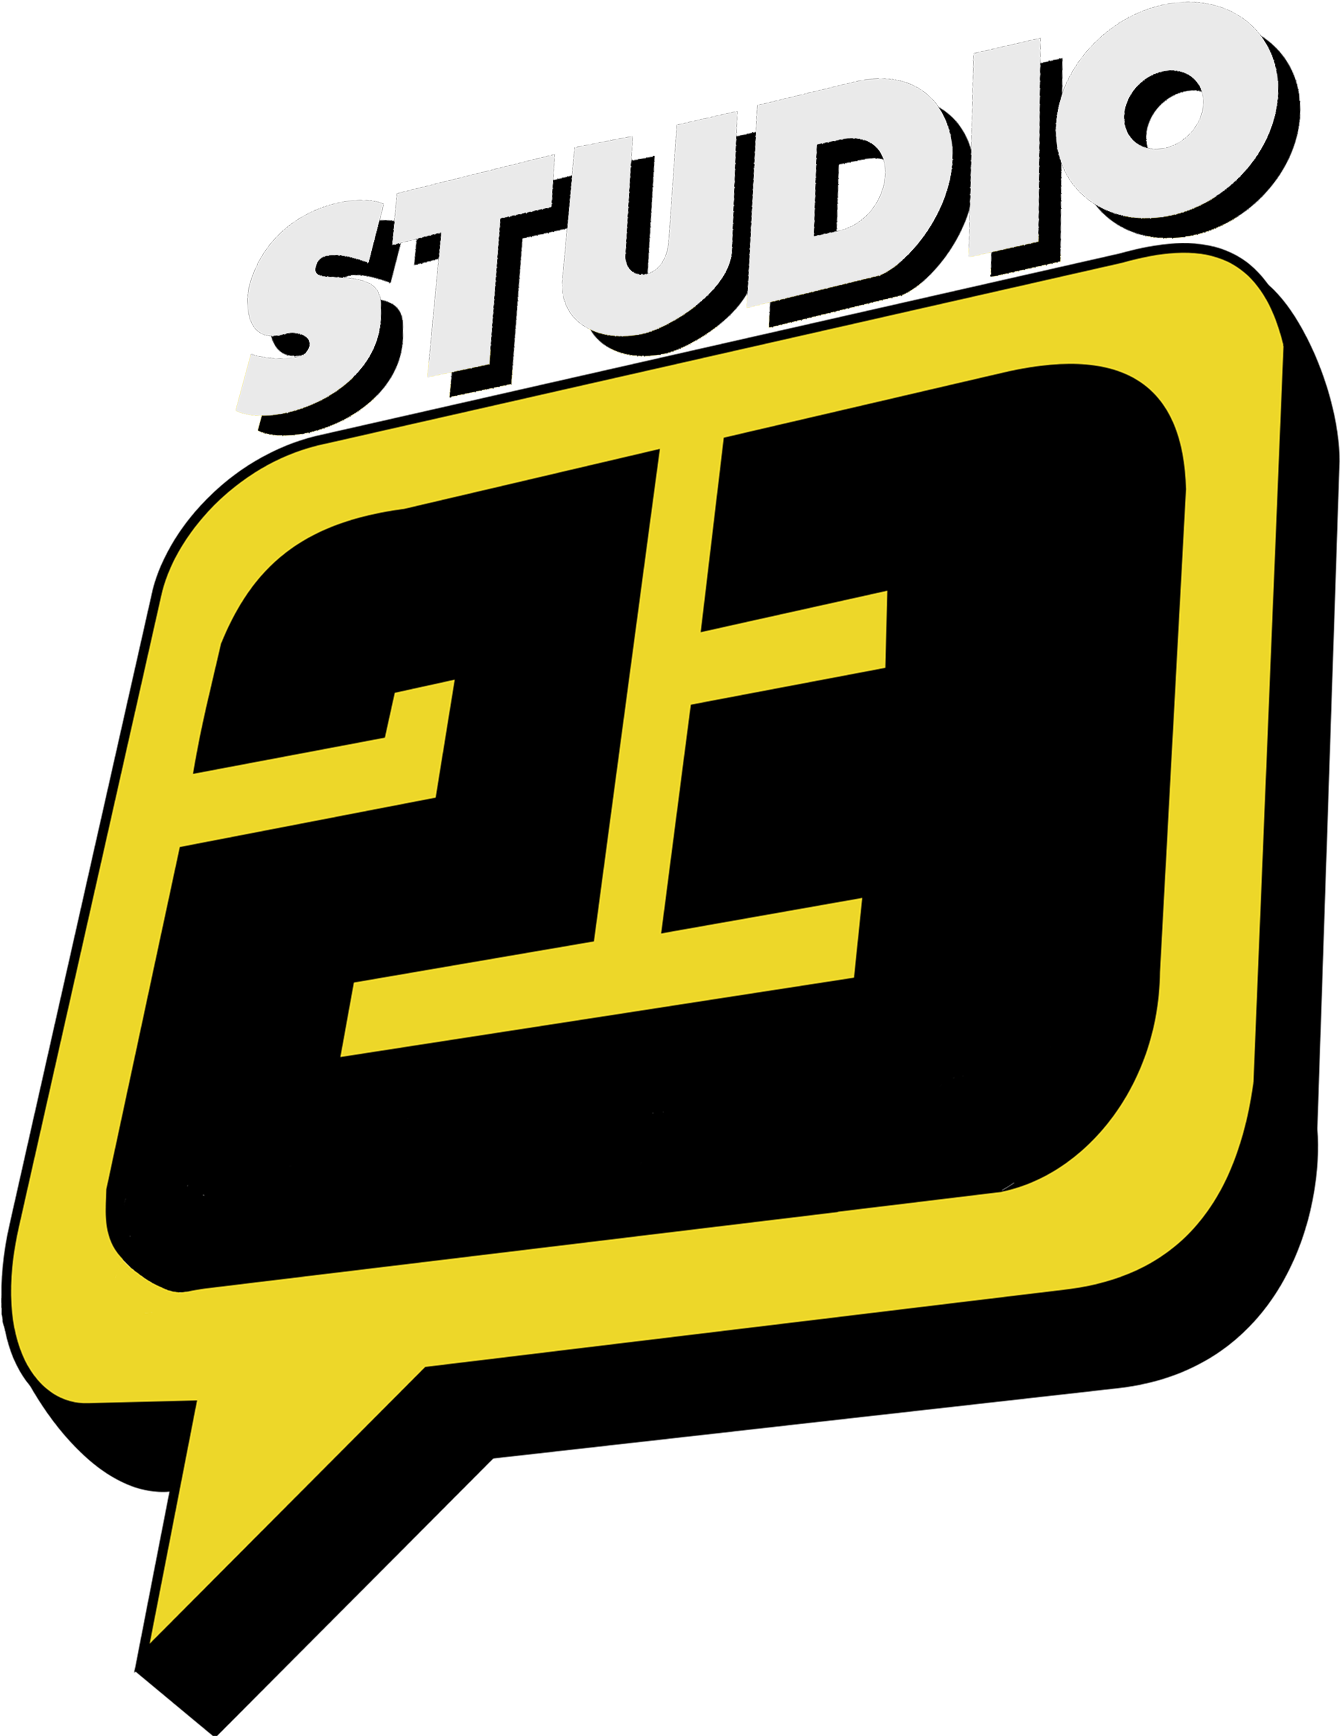 Studio 23 2012 Logo - Studio 23 2012 (1400x1880)